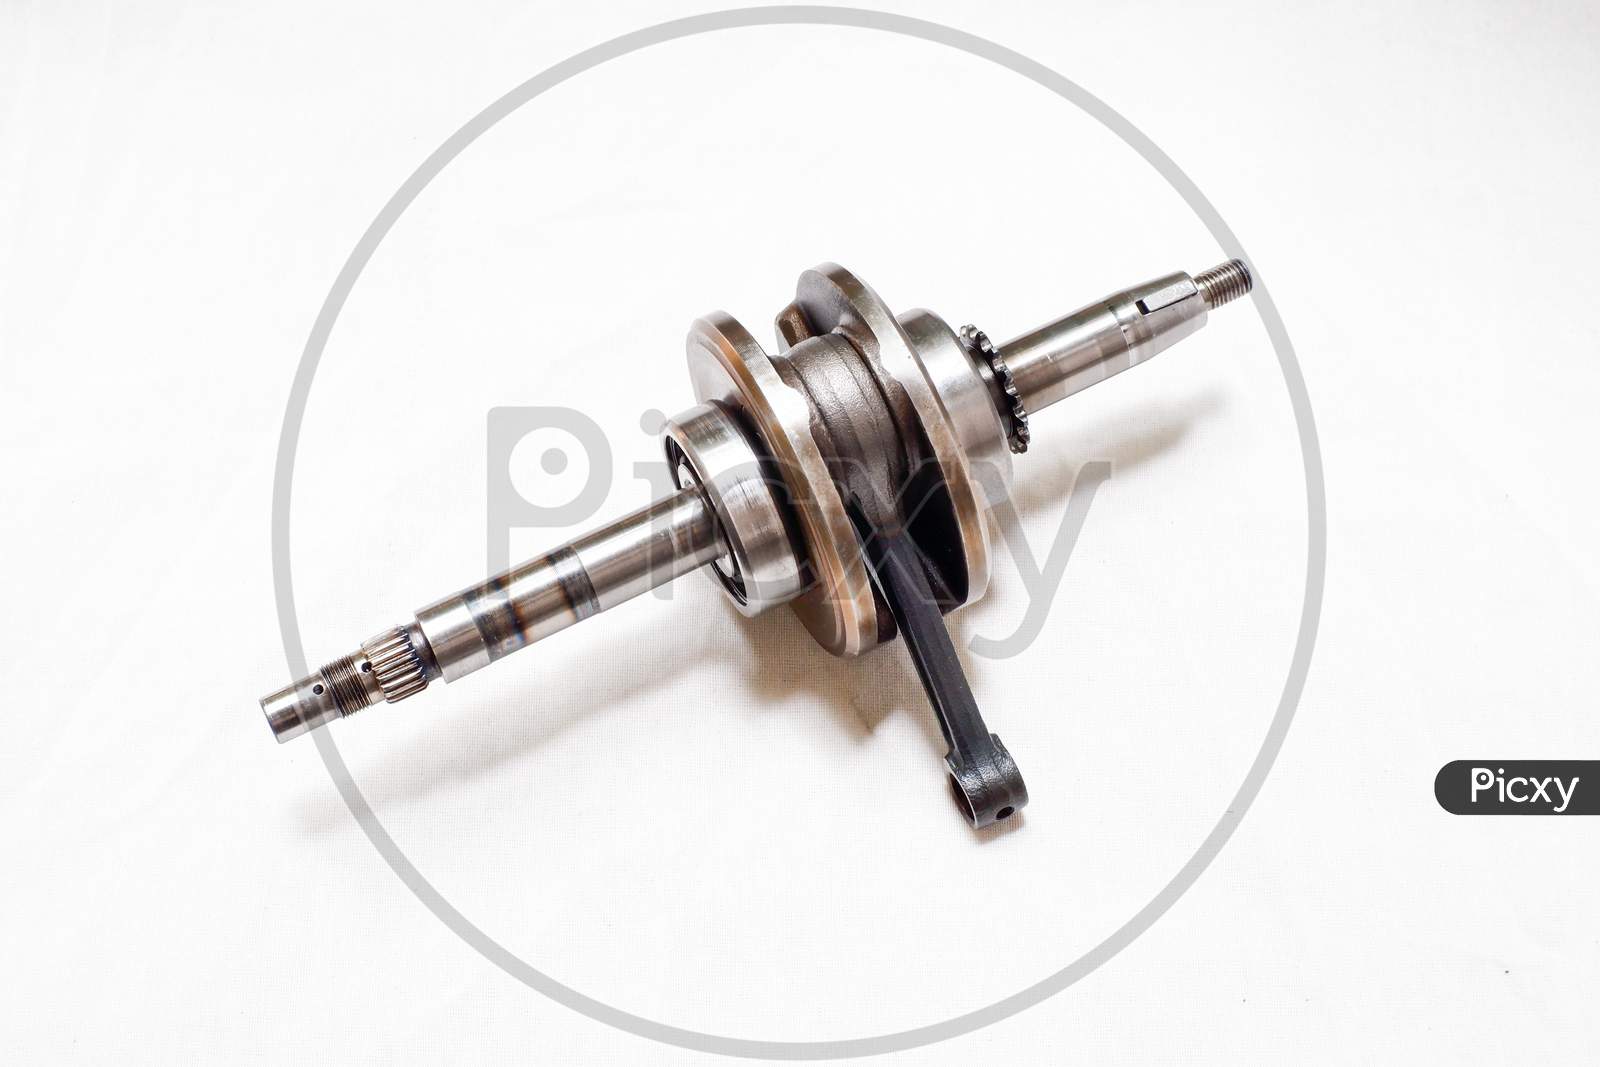 Crankshaft For Motorcycle Engine Components